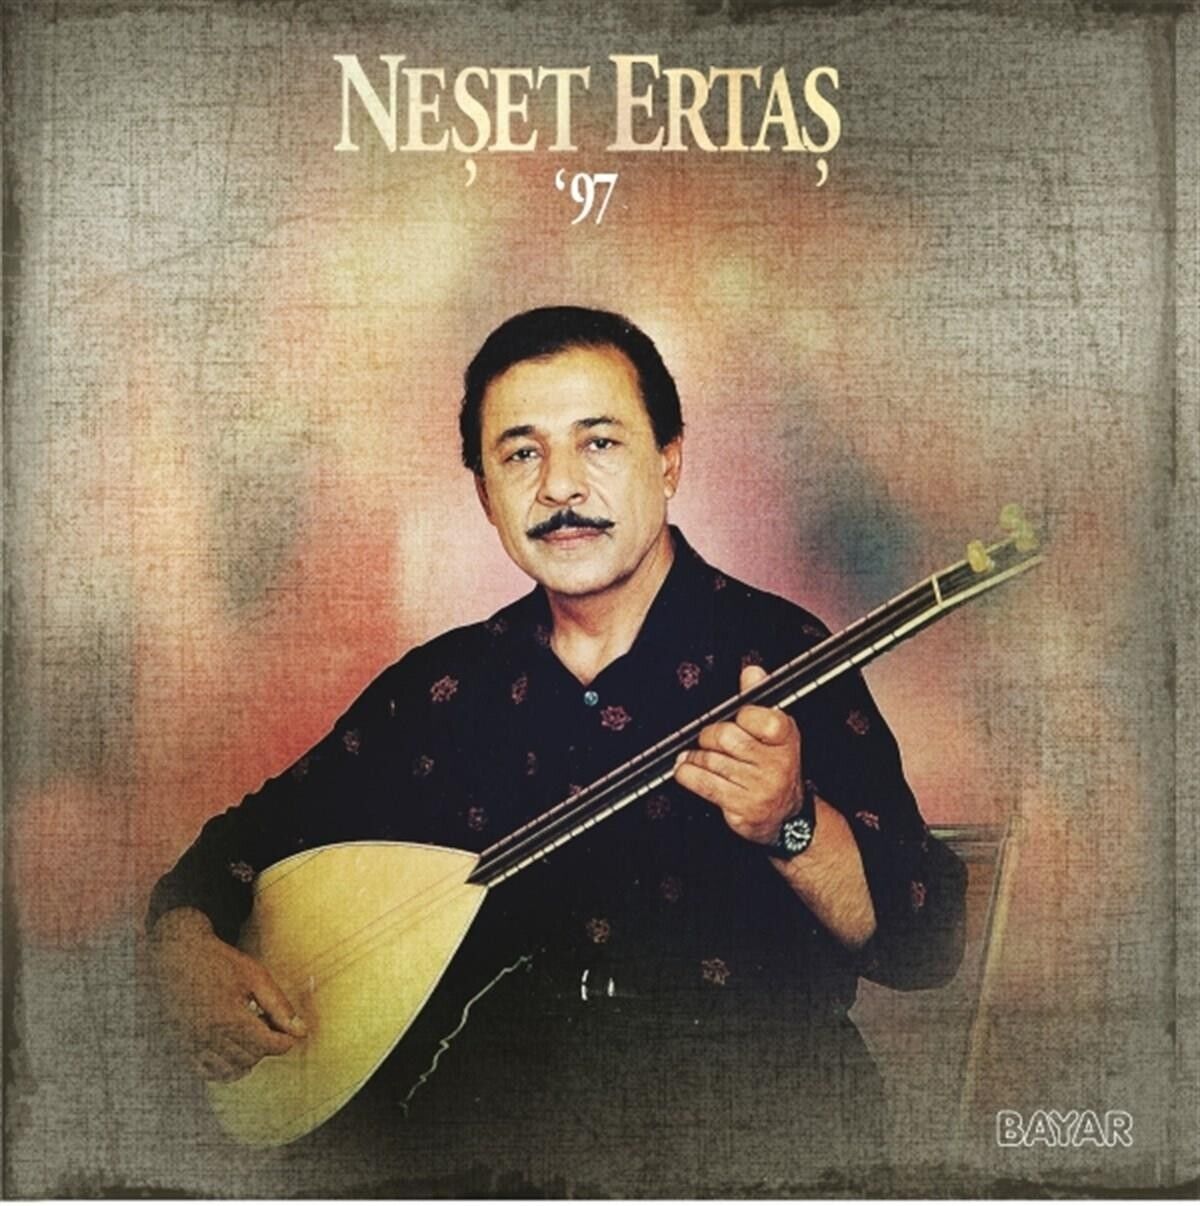 Neşet Ertaş – Neşet Ertaş '97 (2015) LP (Vinyl Record) Turkish Music "New"